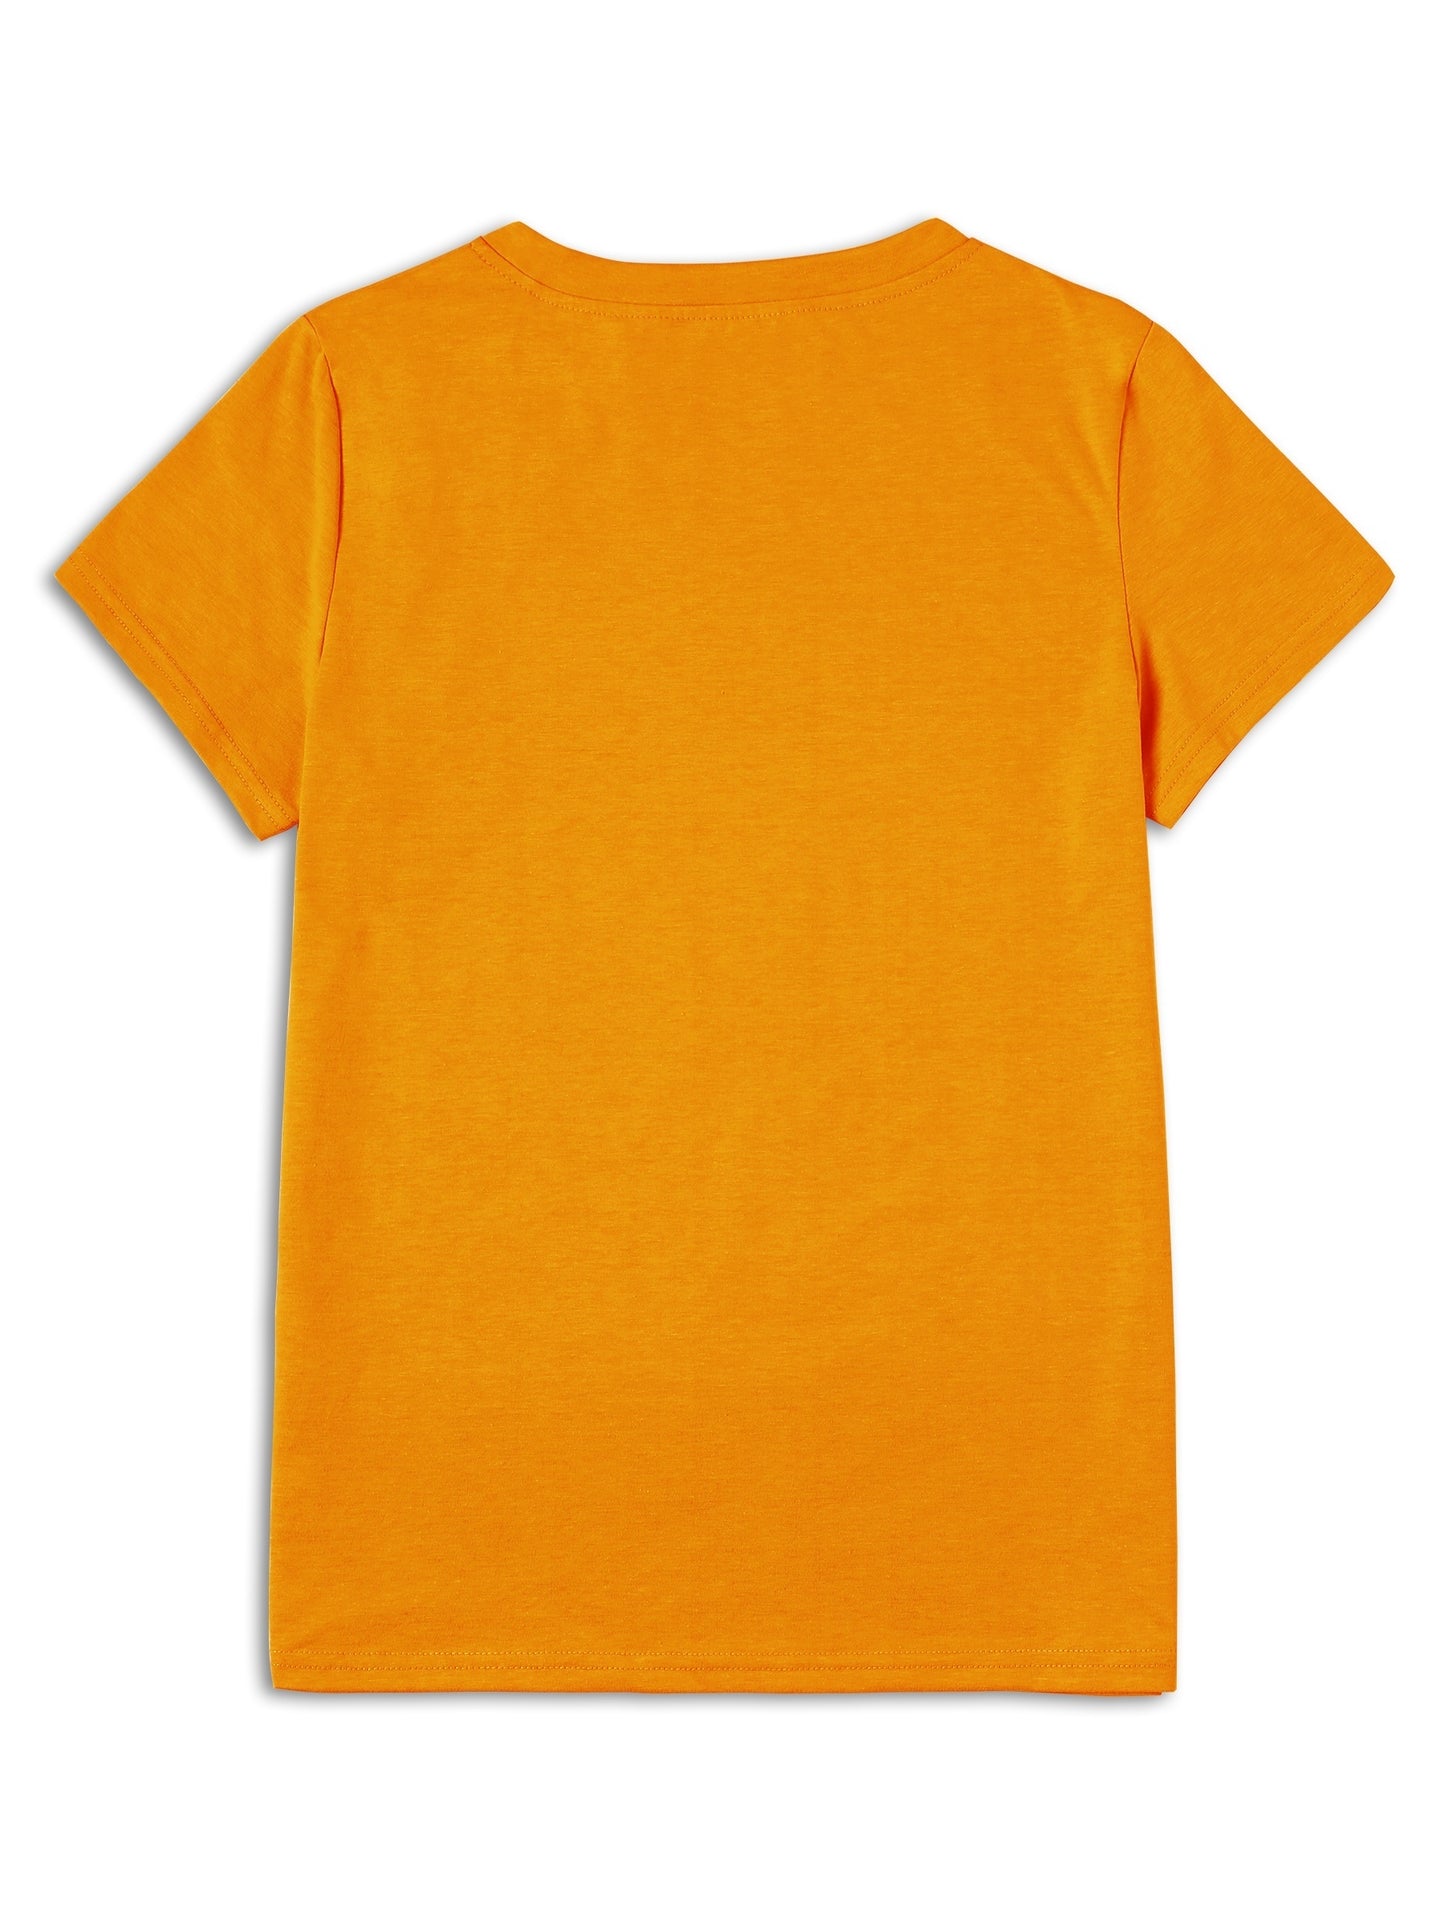 Dog Paw Print T-Shirt, Short Sleeve Crew Neck Casual Top